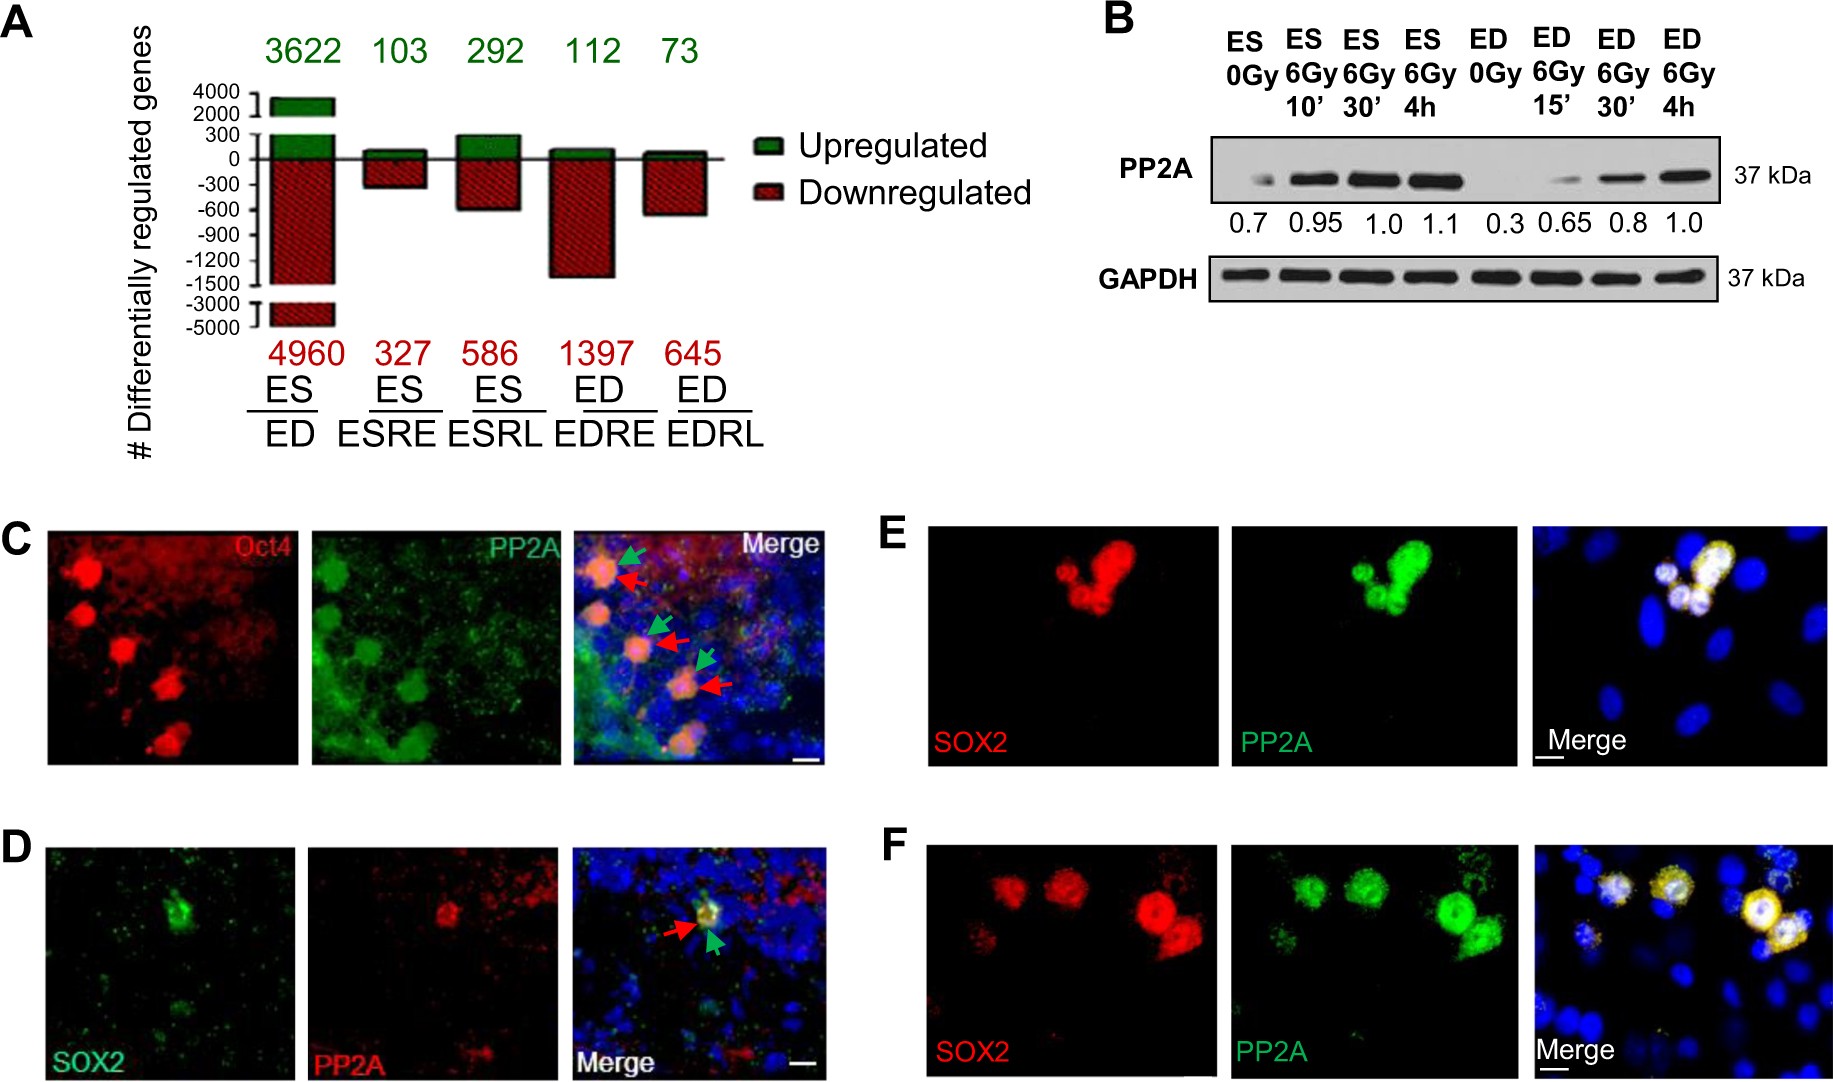 Targeting PP2A-dependent autophagy enhances sensitivity to